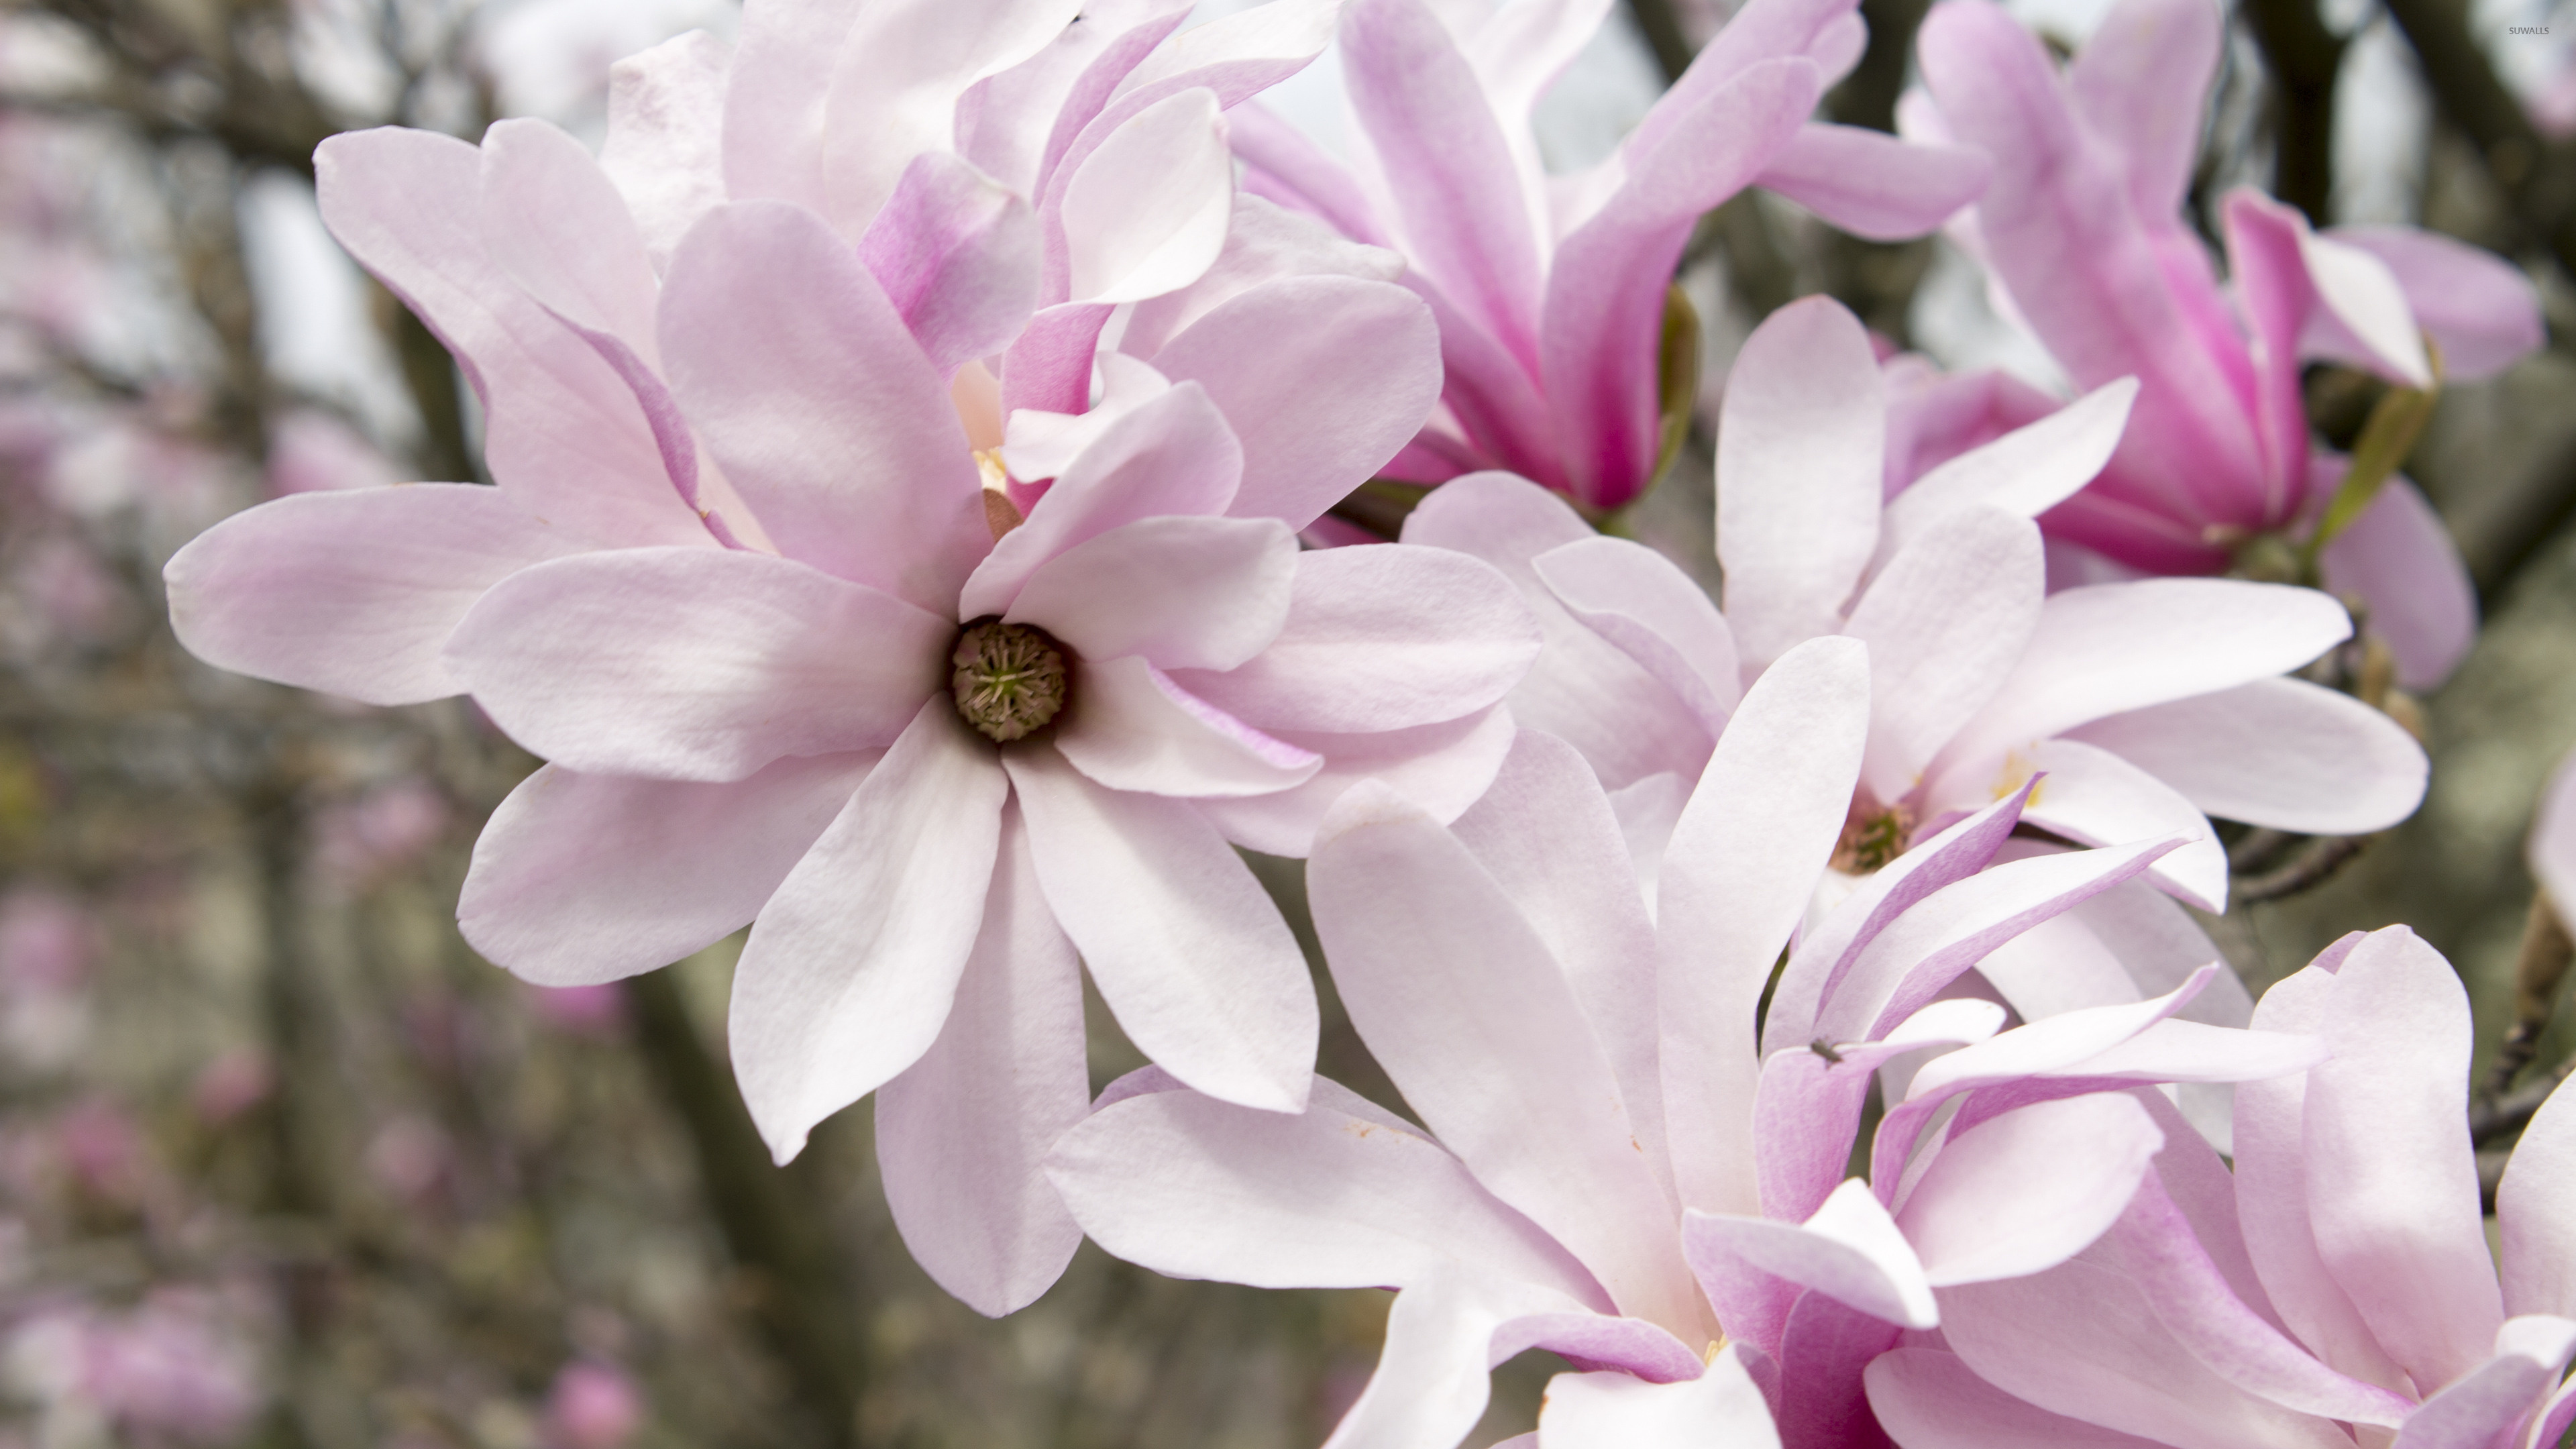 Pink magnolias, Floral wallpaper, Delicate petals, Nature's charm, 3840x2160 4K Desktop